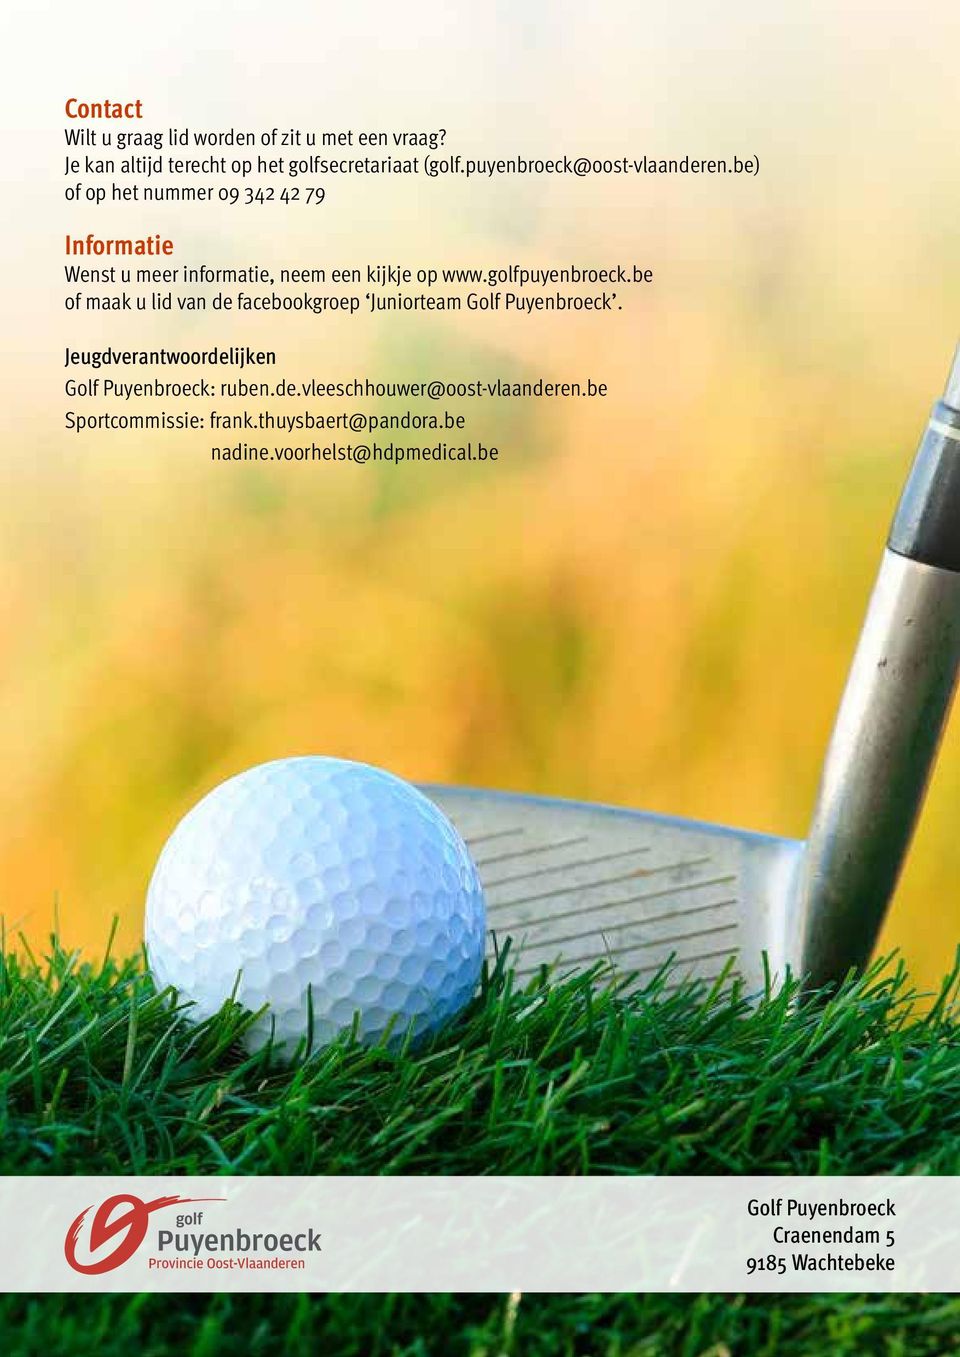 golfpuyenbroeck.be of maak u lid van de facebookgroep Juniorteam Golf Puyenbroeck.